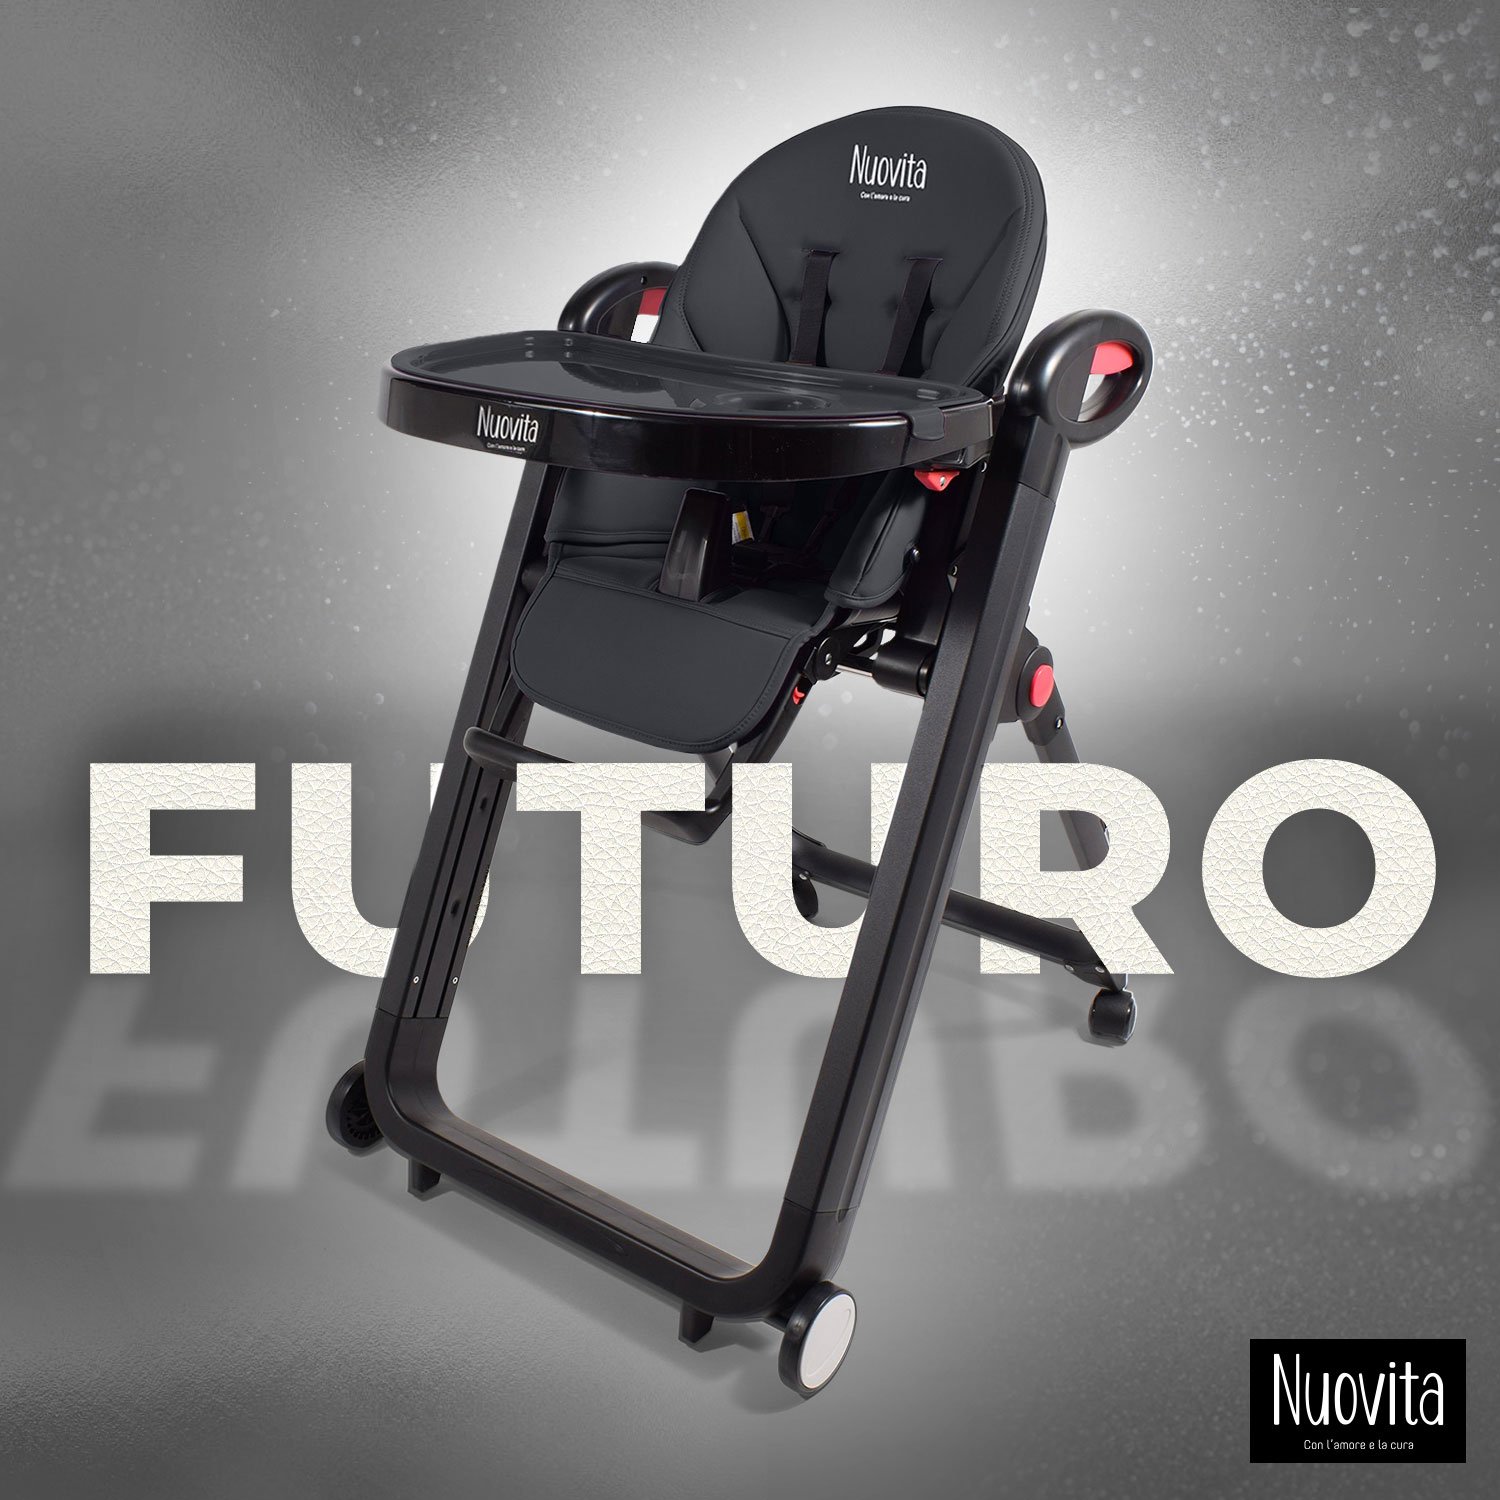 Стульчик для кормления Nuovita Futuro Nero (Nero / Черный) стульчик для кормления nuovita futuro senso nero verde зеленый